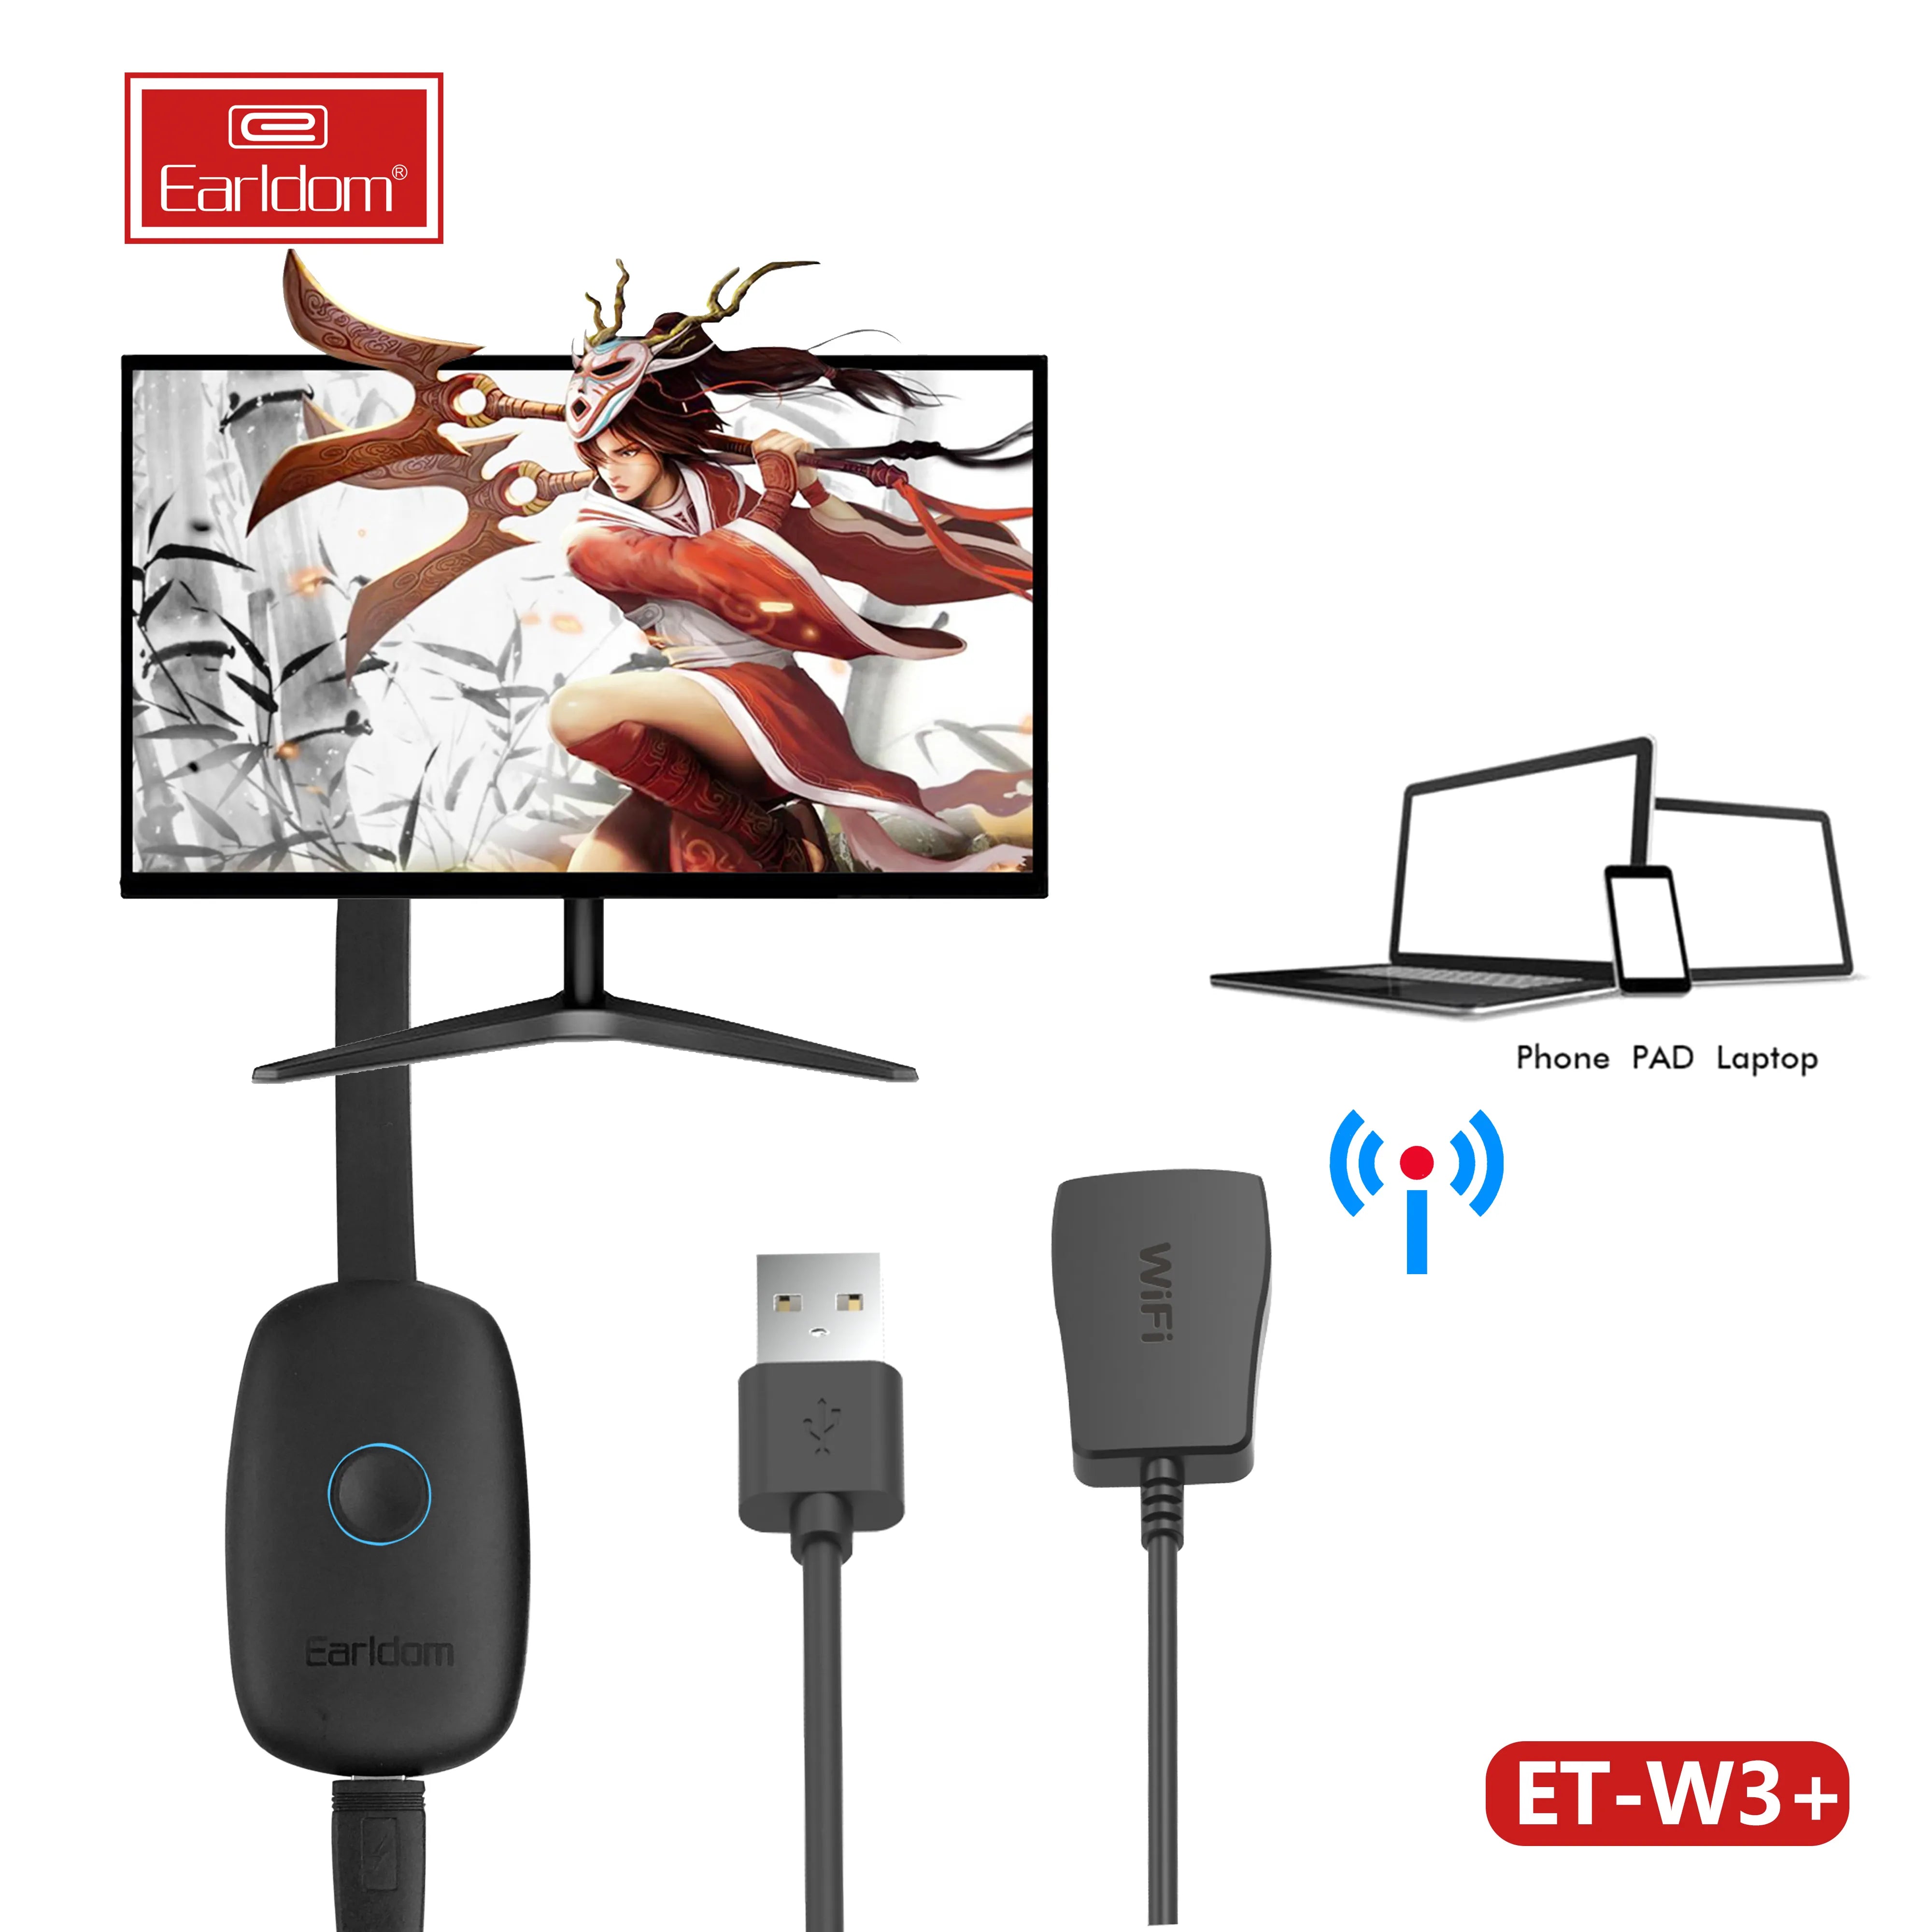 Wireless WIFI TV Dongle, 1080P HD Wireless Wifi Display Dongle